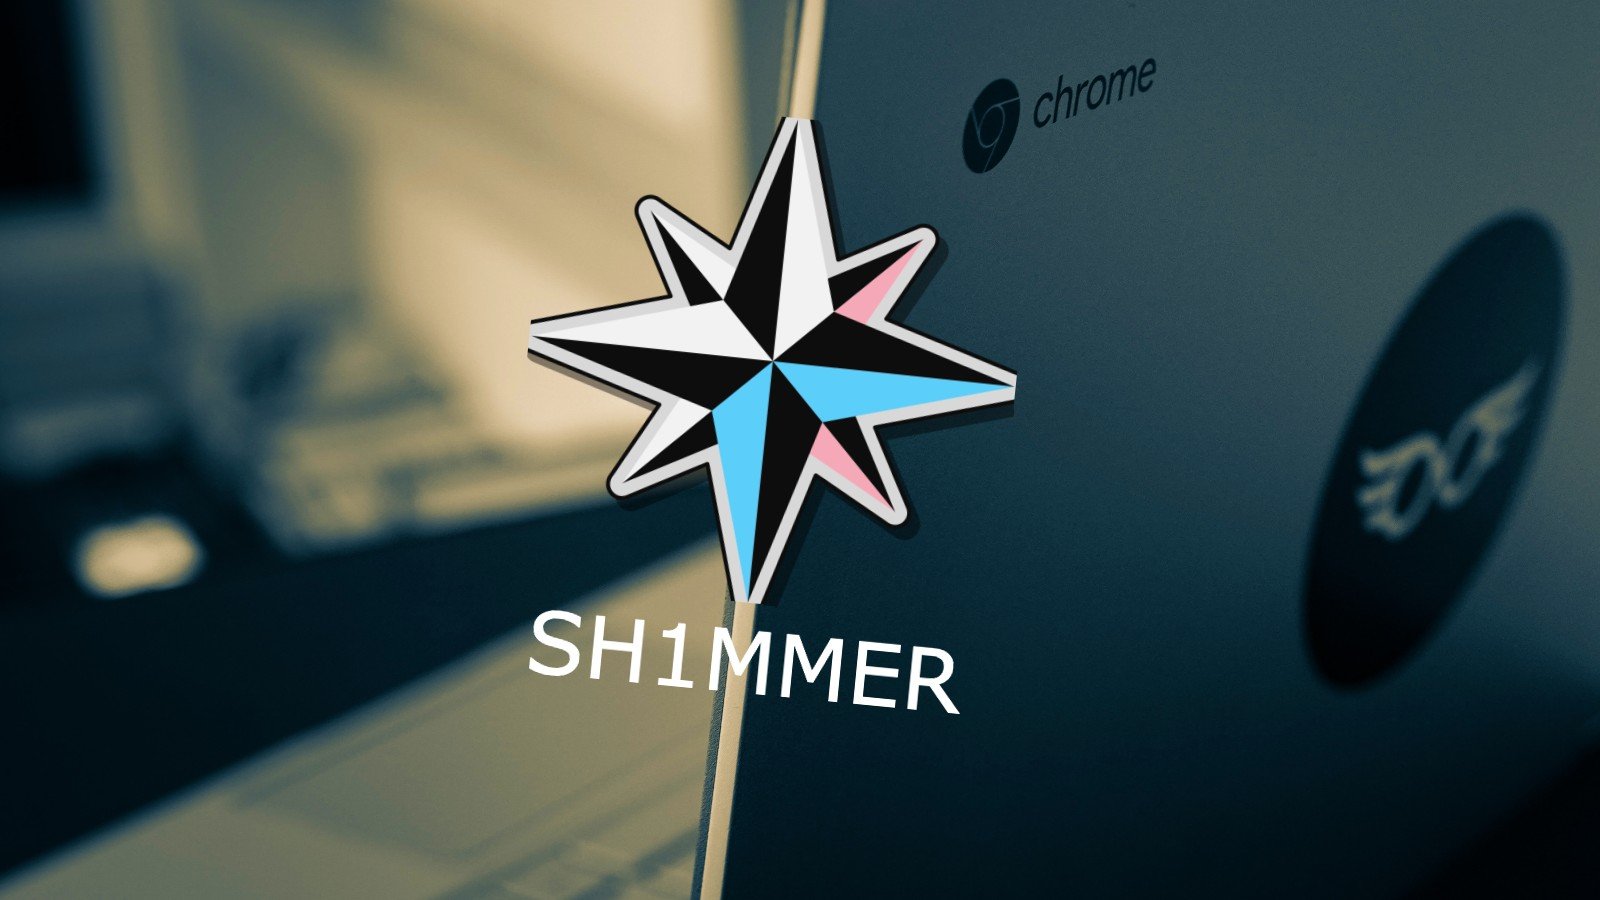 Logotipo de Sh1mmer sobre un Chromebook